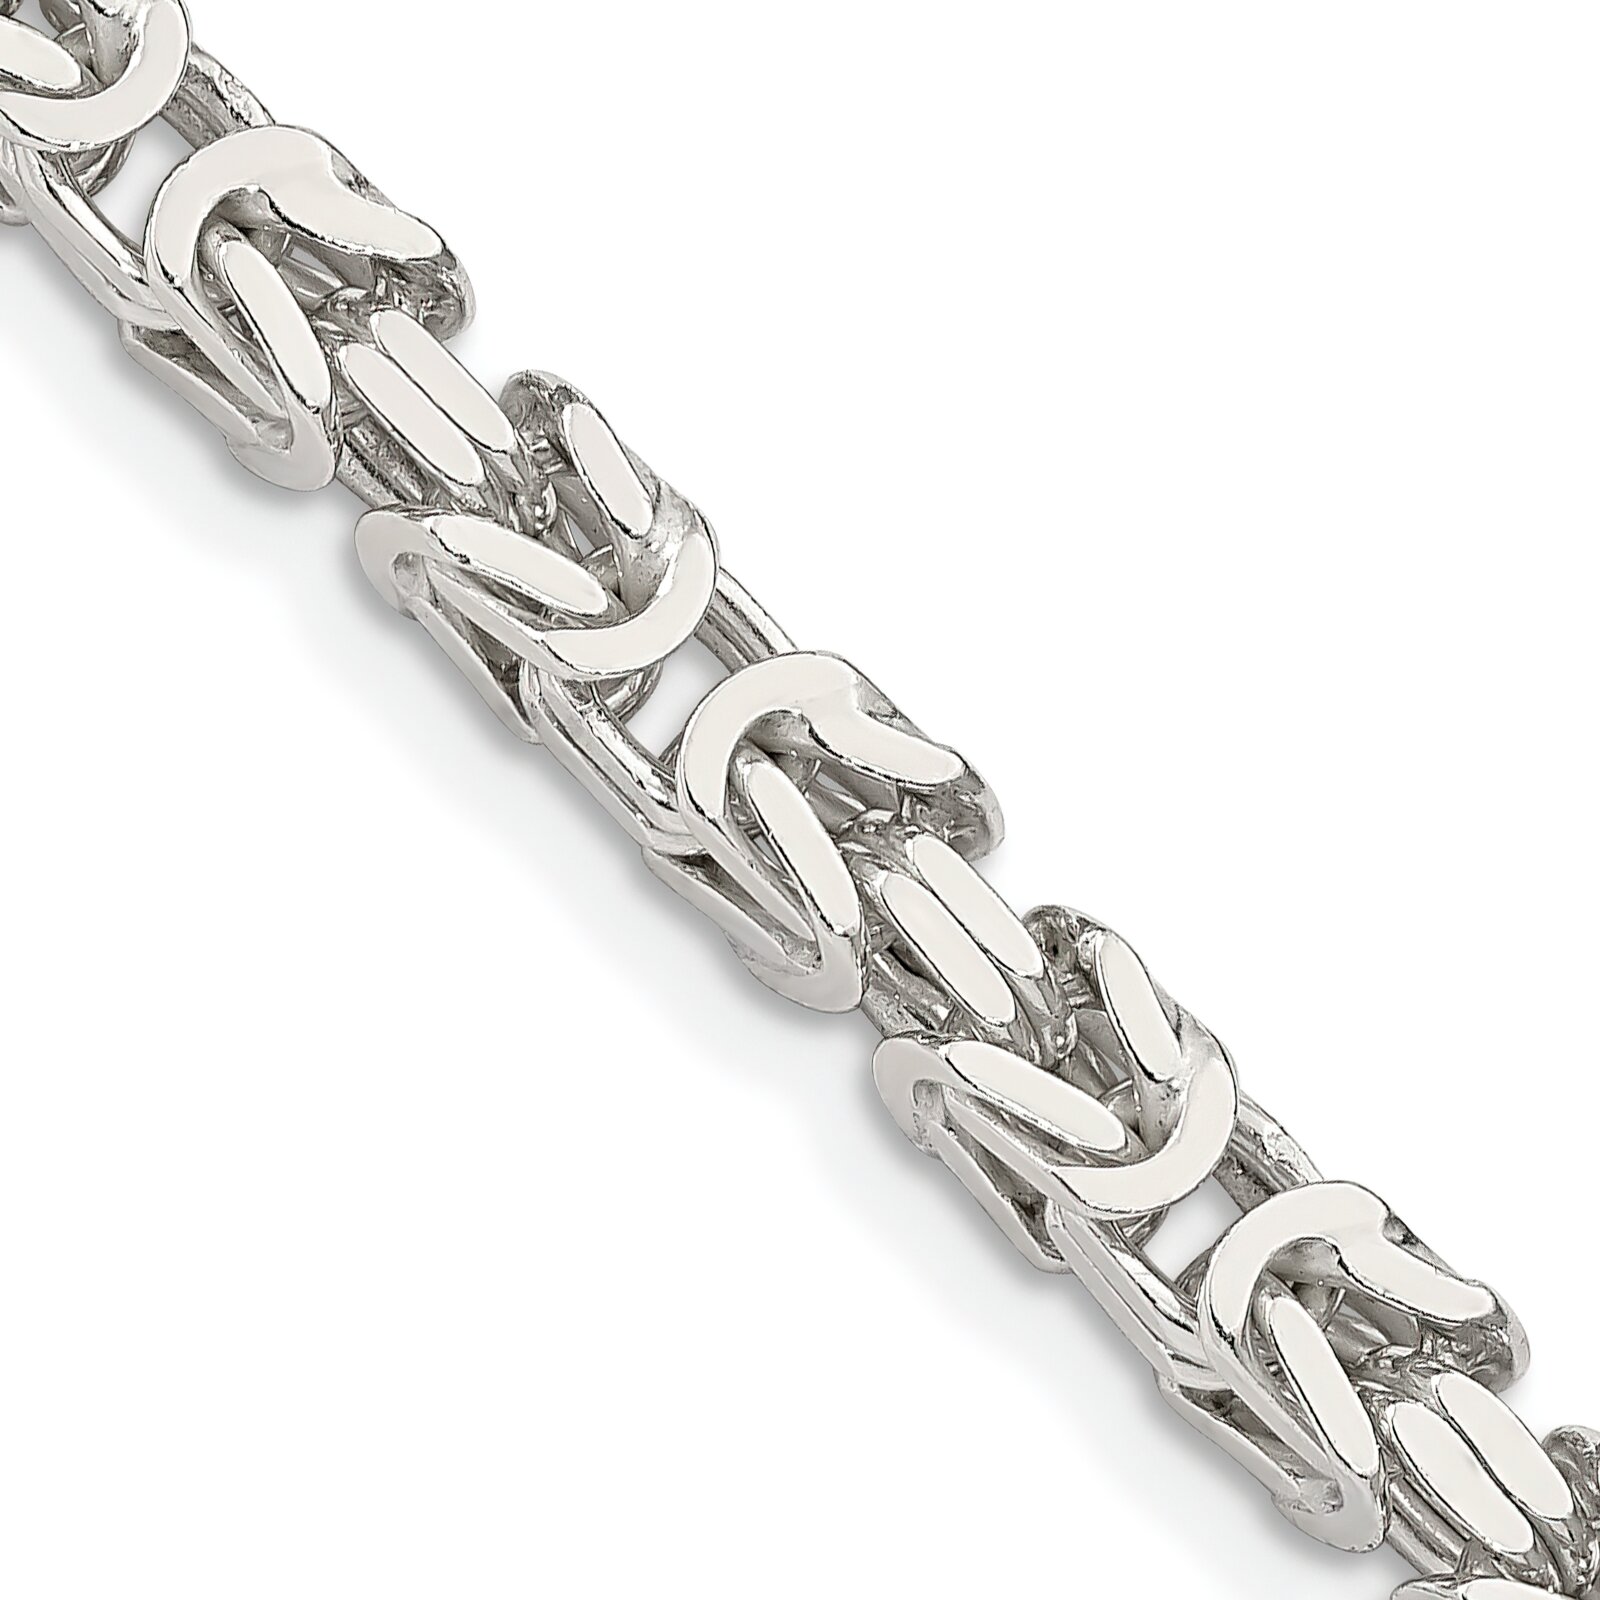 Findingking Sterling Silver Byzantine Link Bracelet 7"